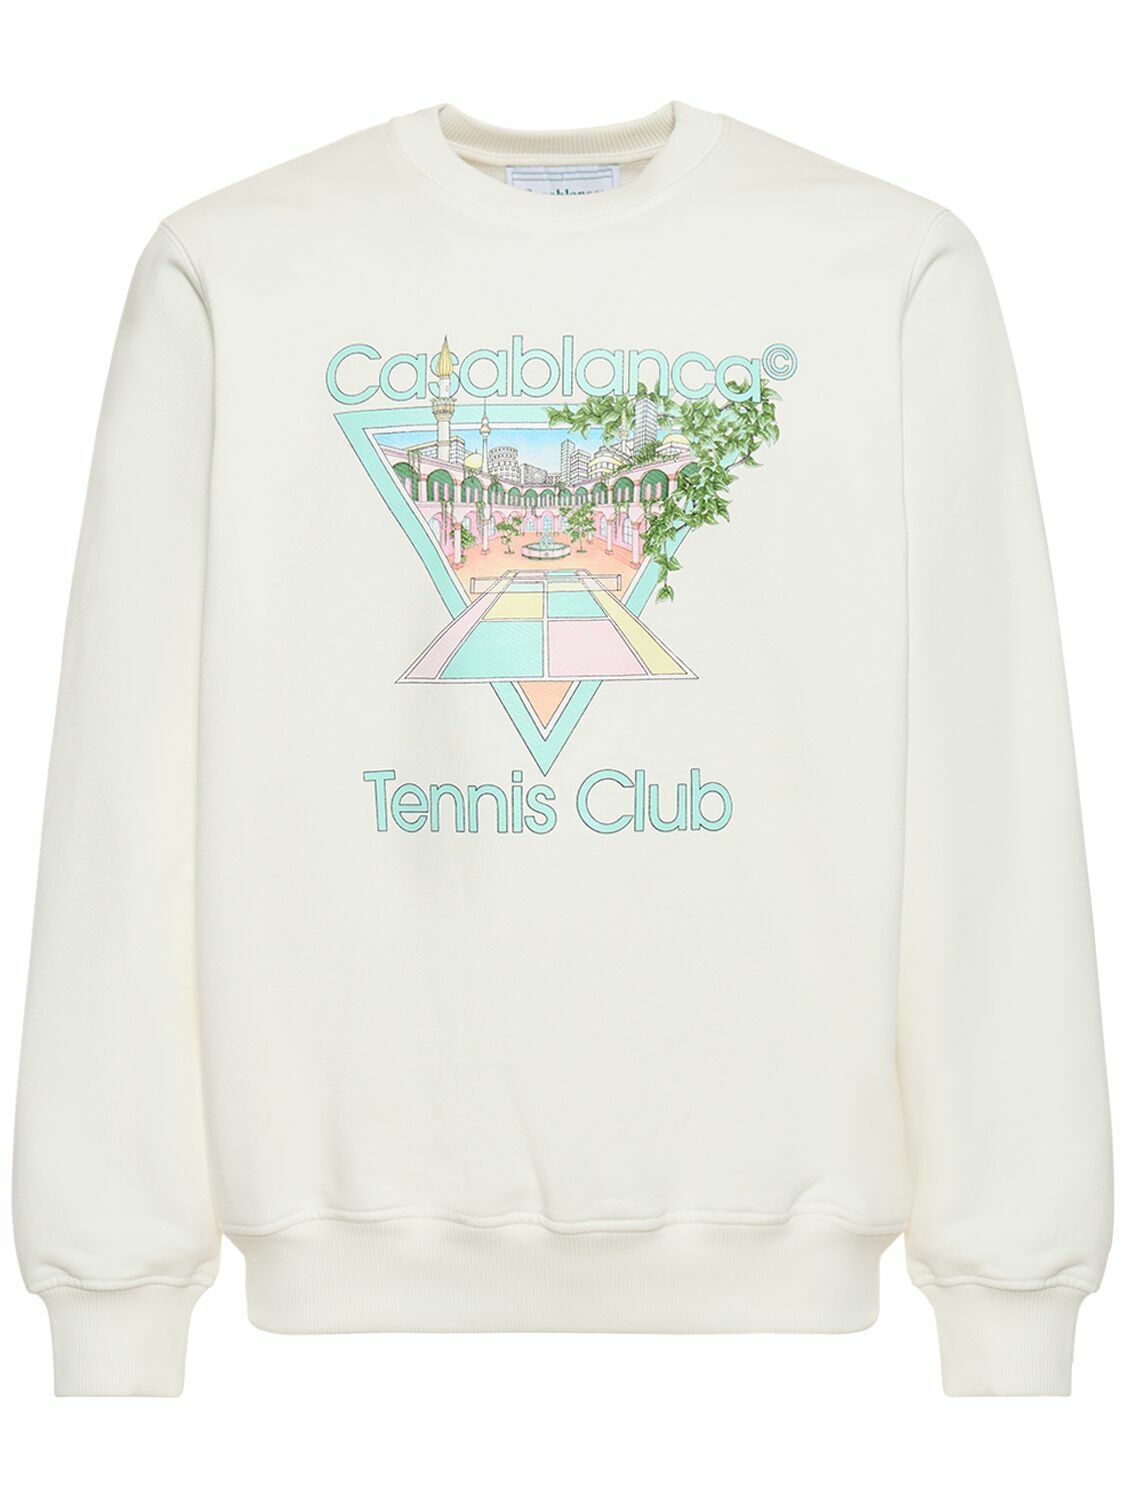 Photo: CASABLANCA - Tennis Club Organic Cotton Sweatshirt